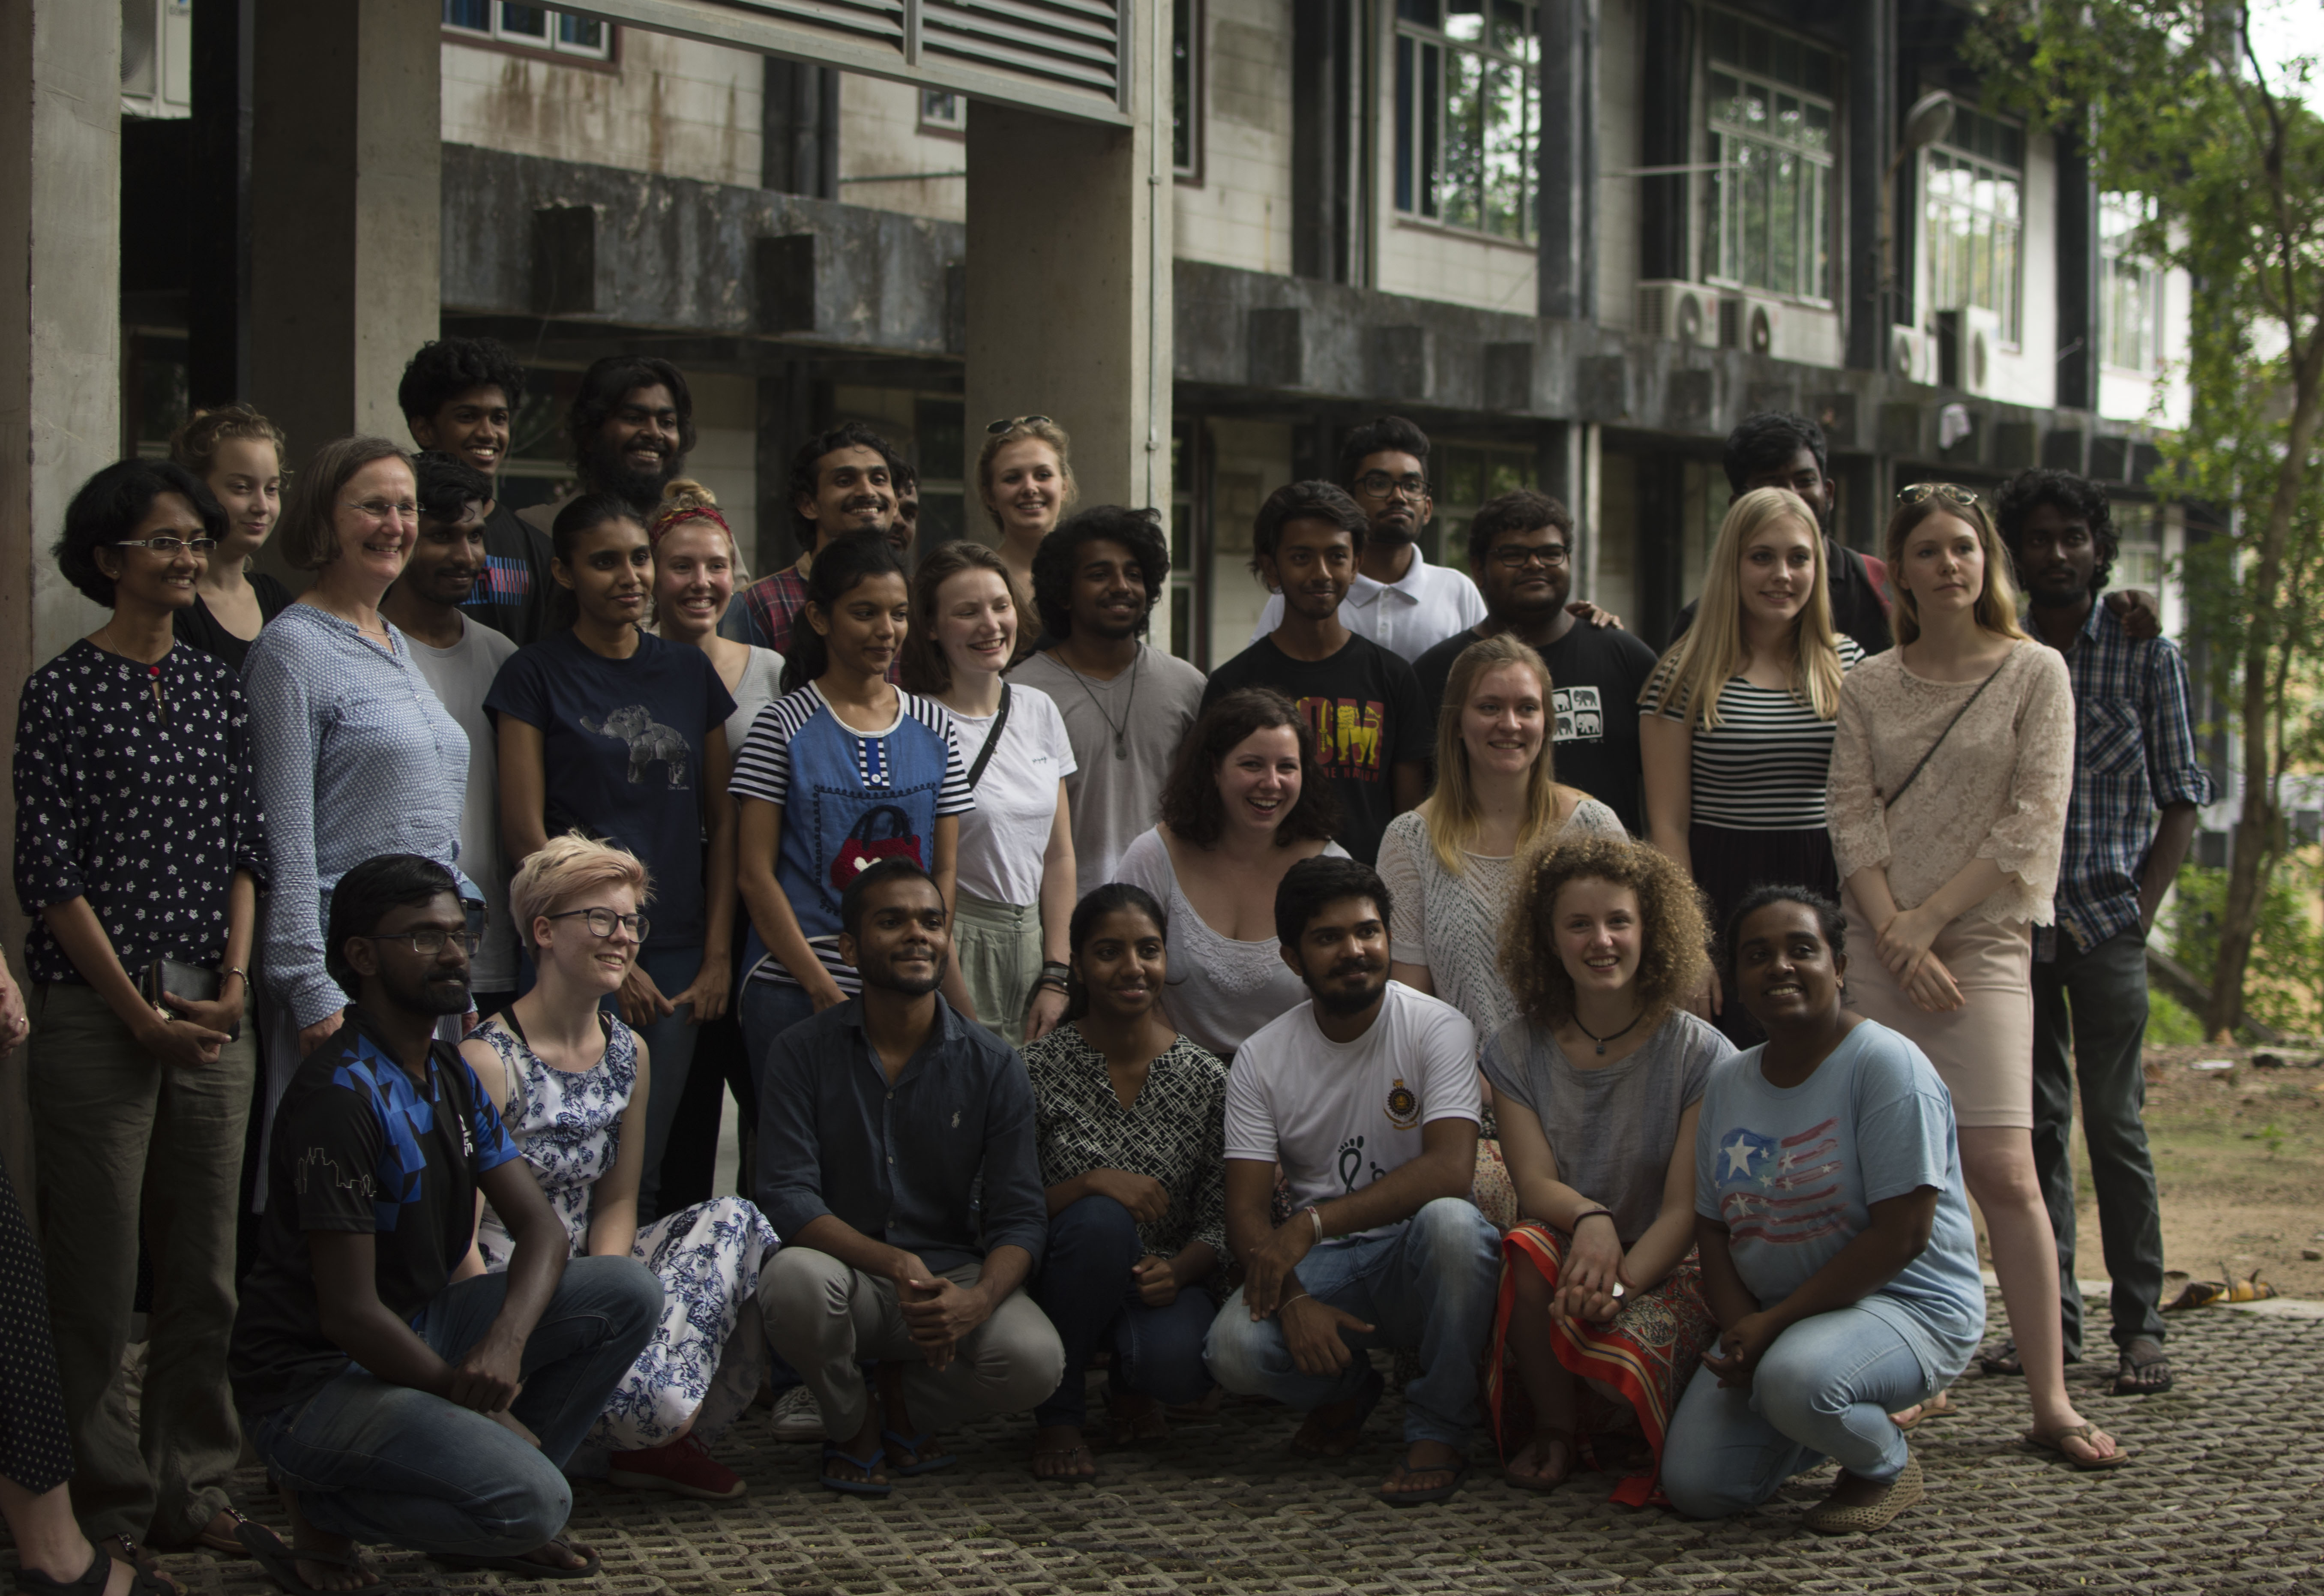 A Delegation from Osnabruck University, Germany visited the University of Moratuwa